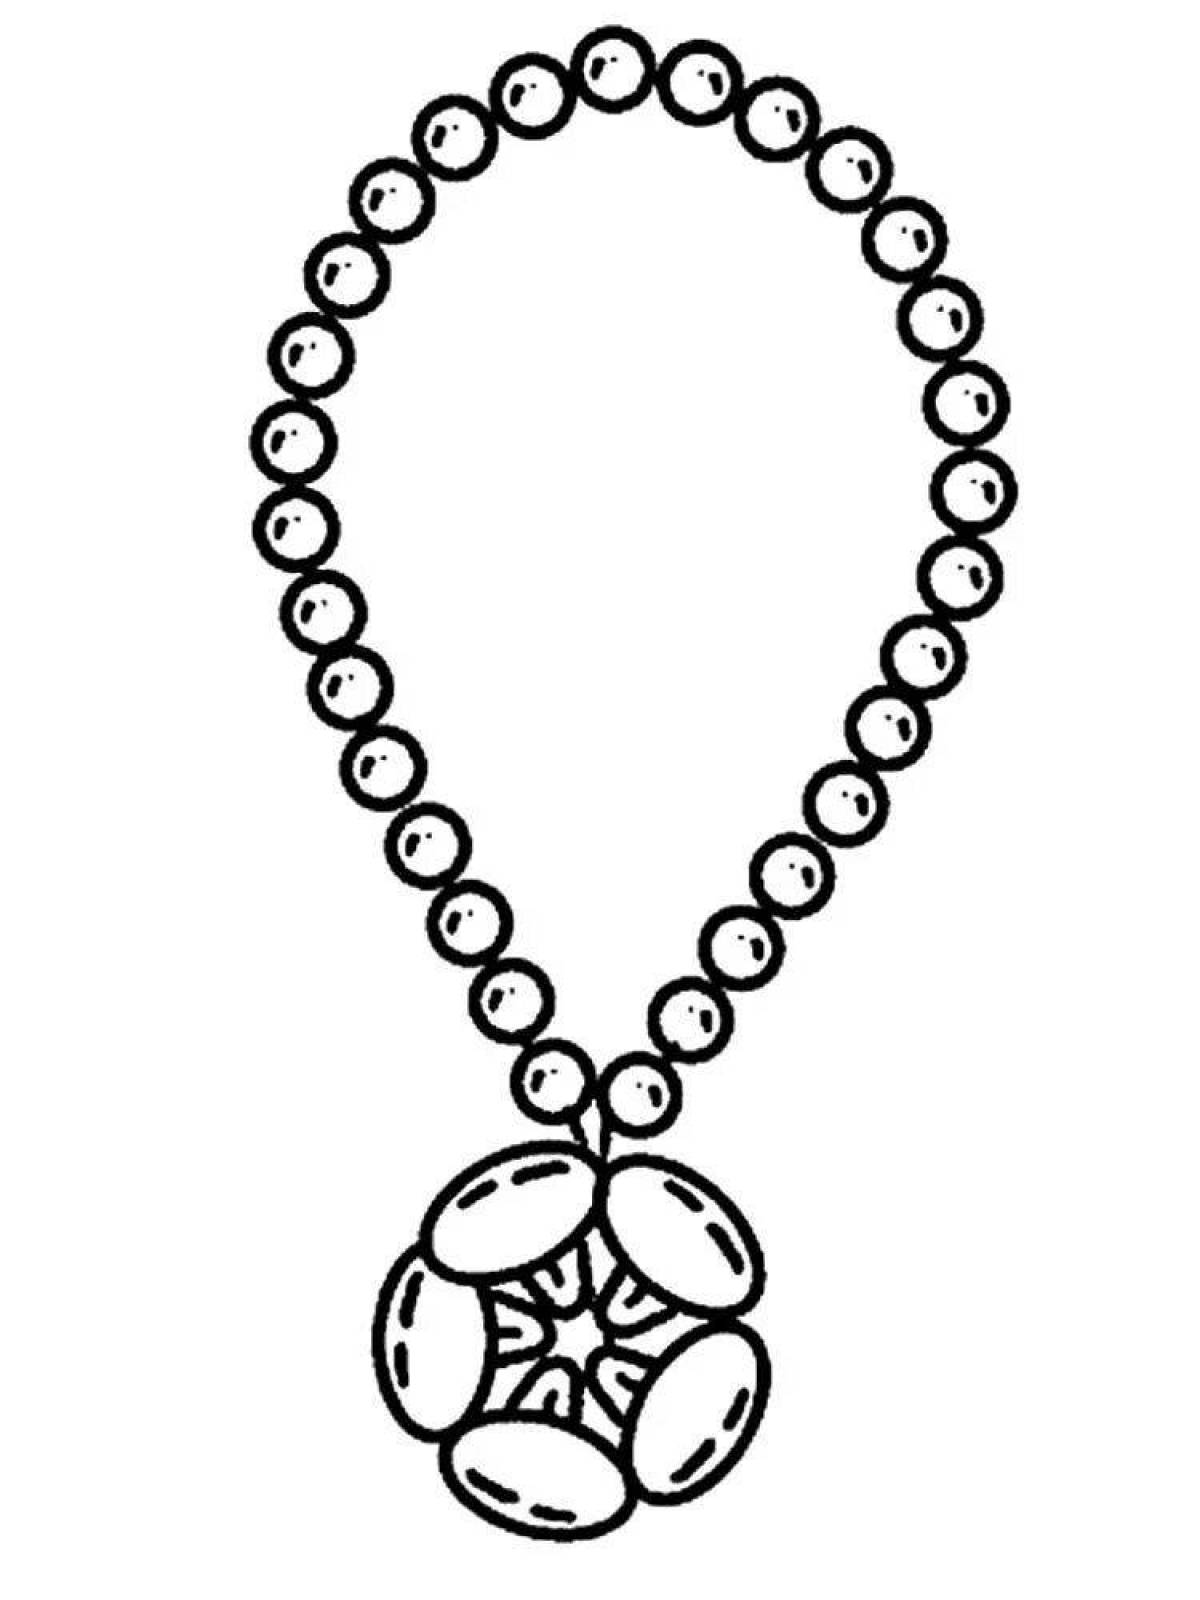 Рисунок ожерелье